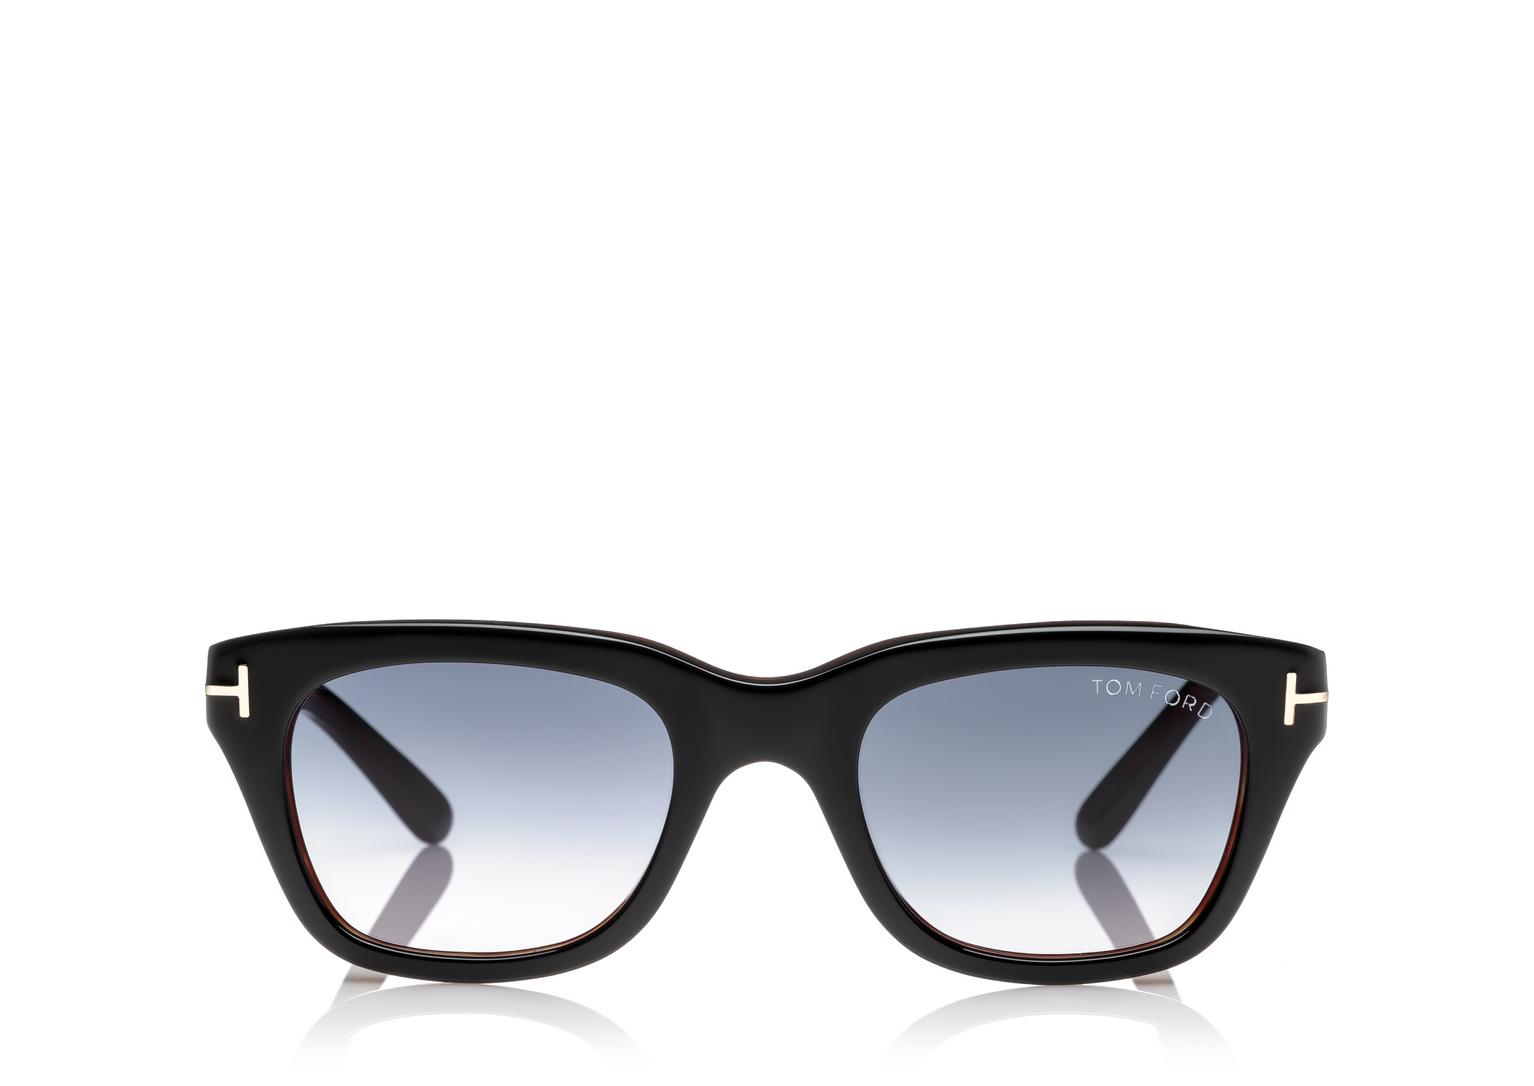 Tom Sunglasses and Eyewear 2016 | Breslow Eye